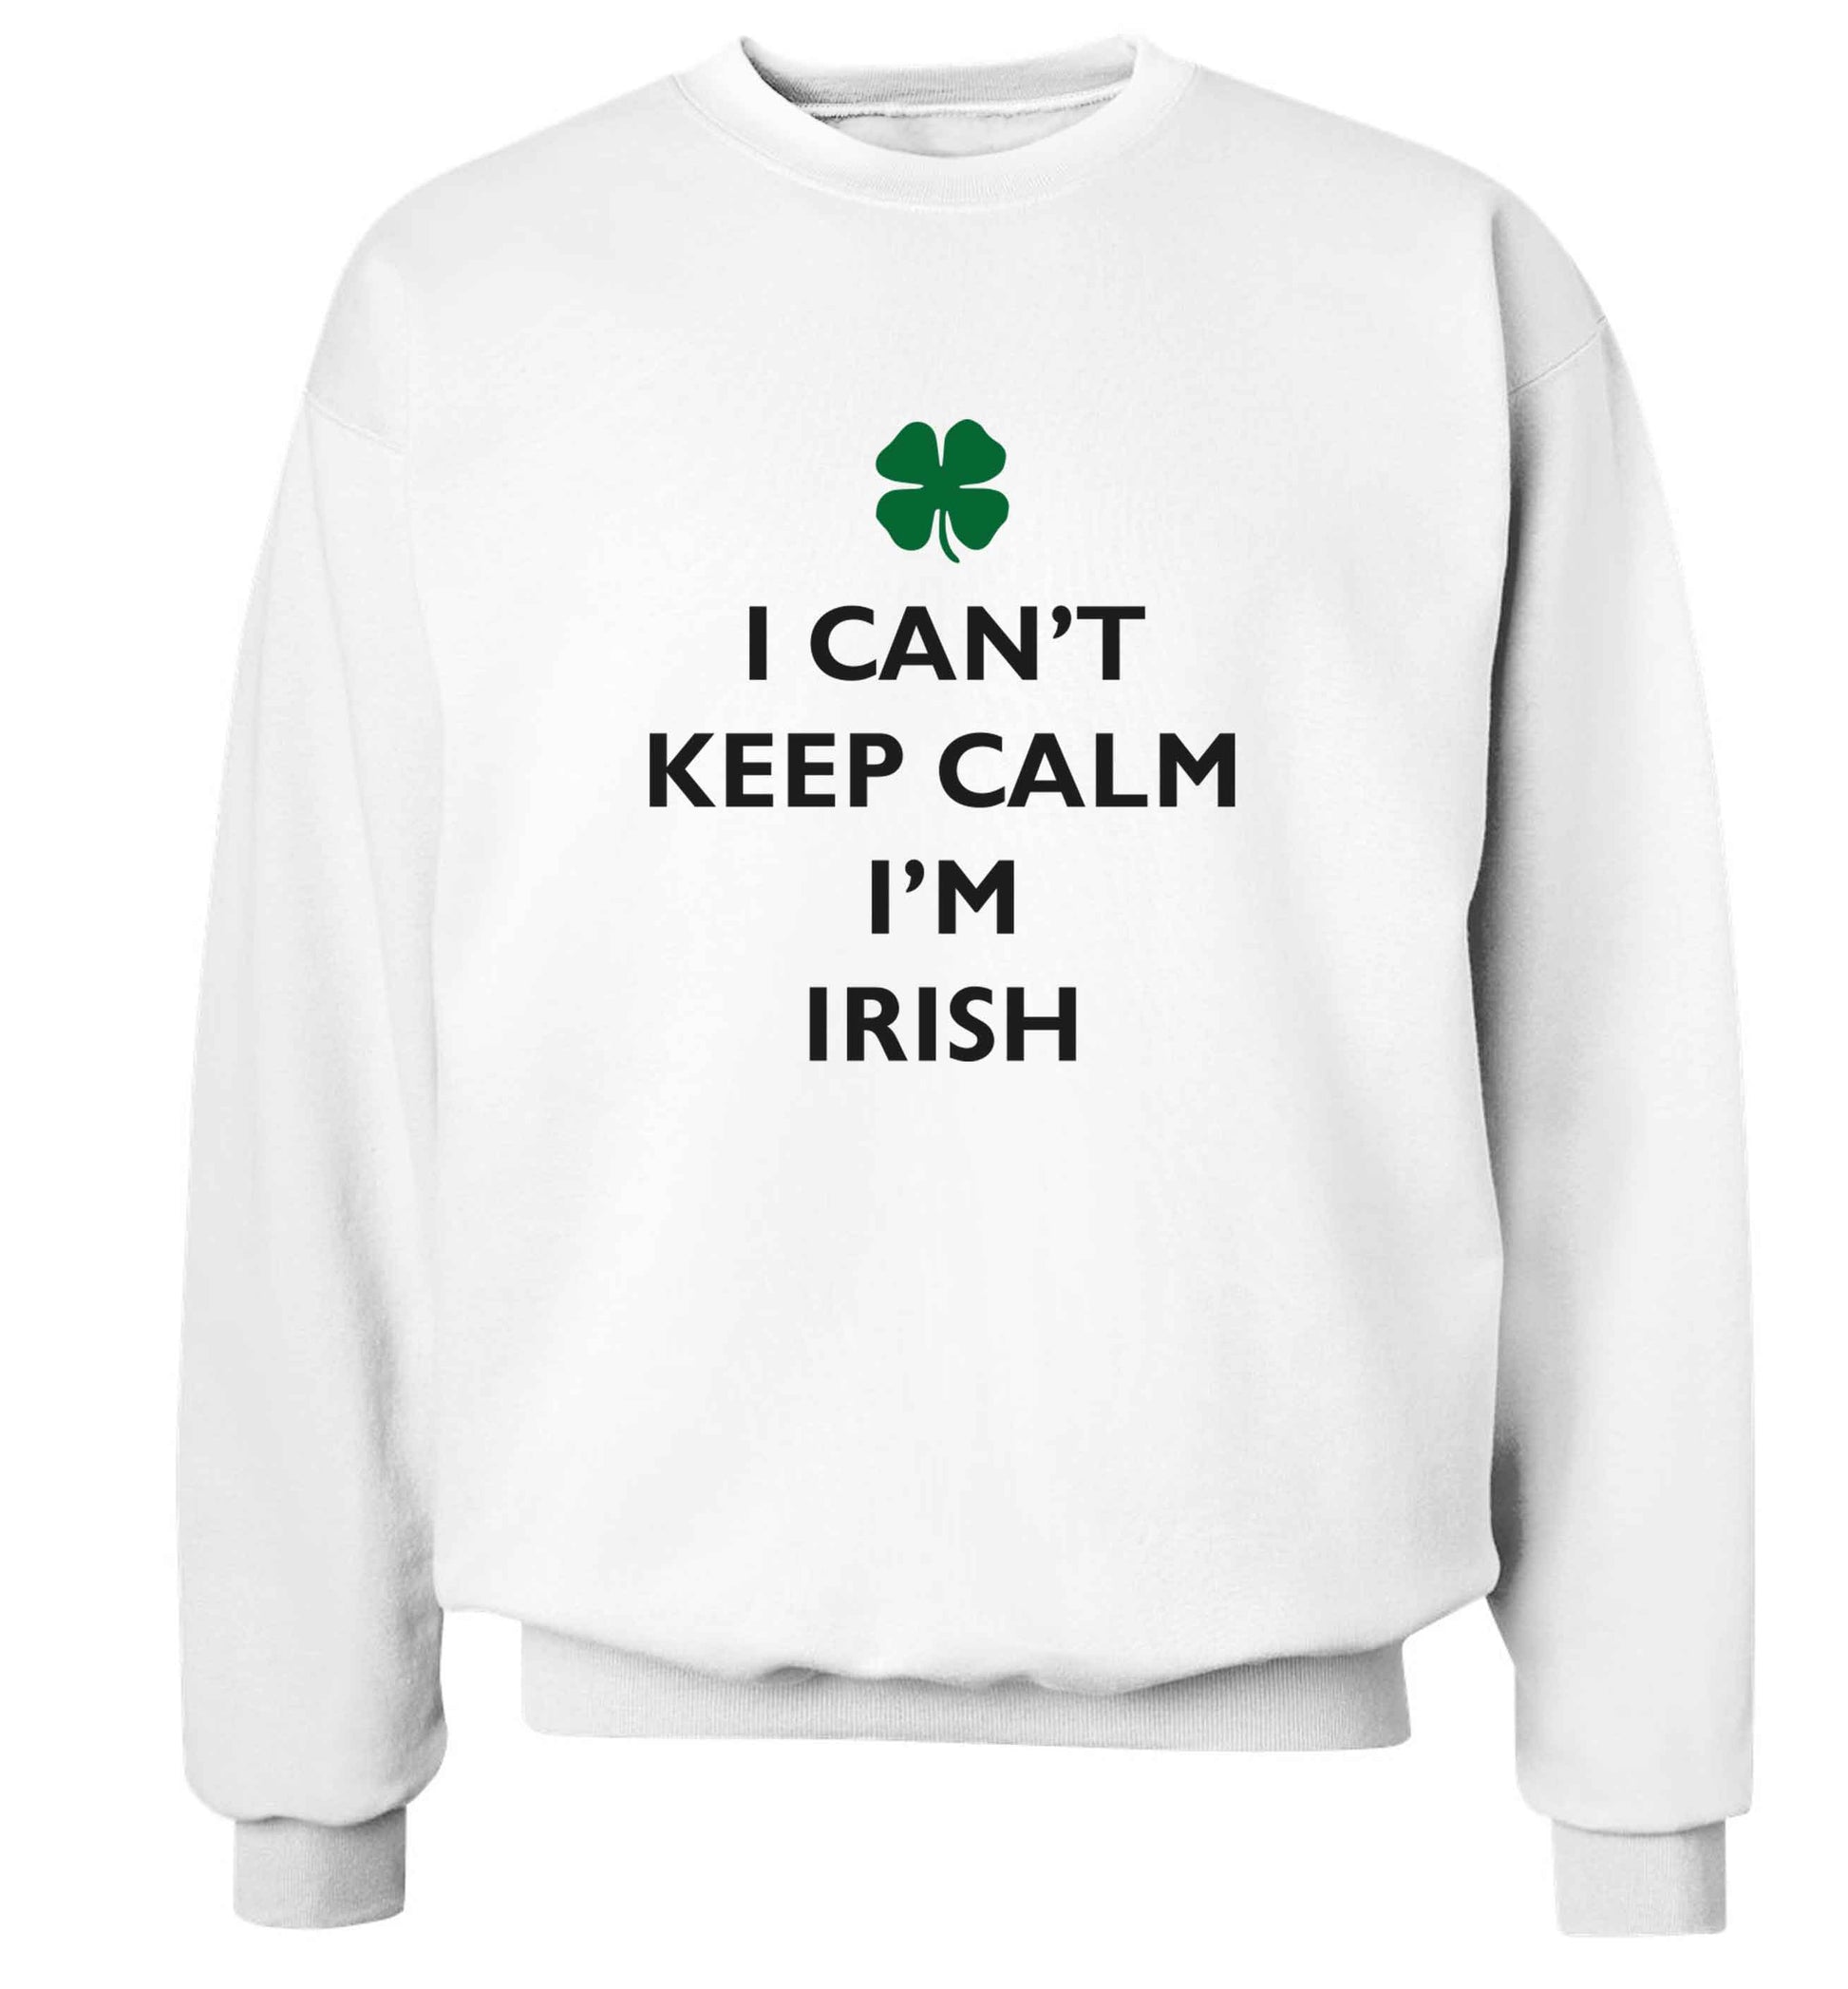 I can't keep calm I'm Irish adult's unisex white sweater 2XL